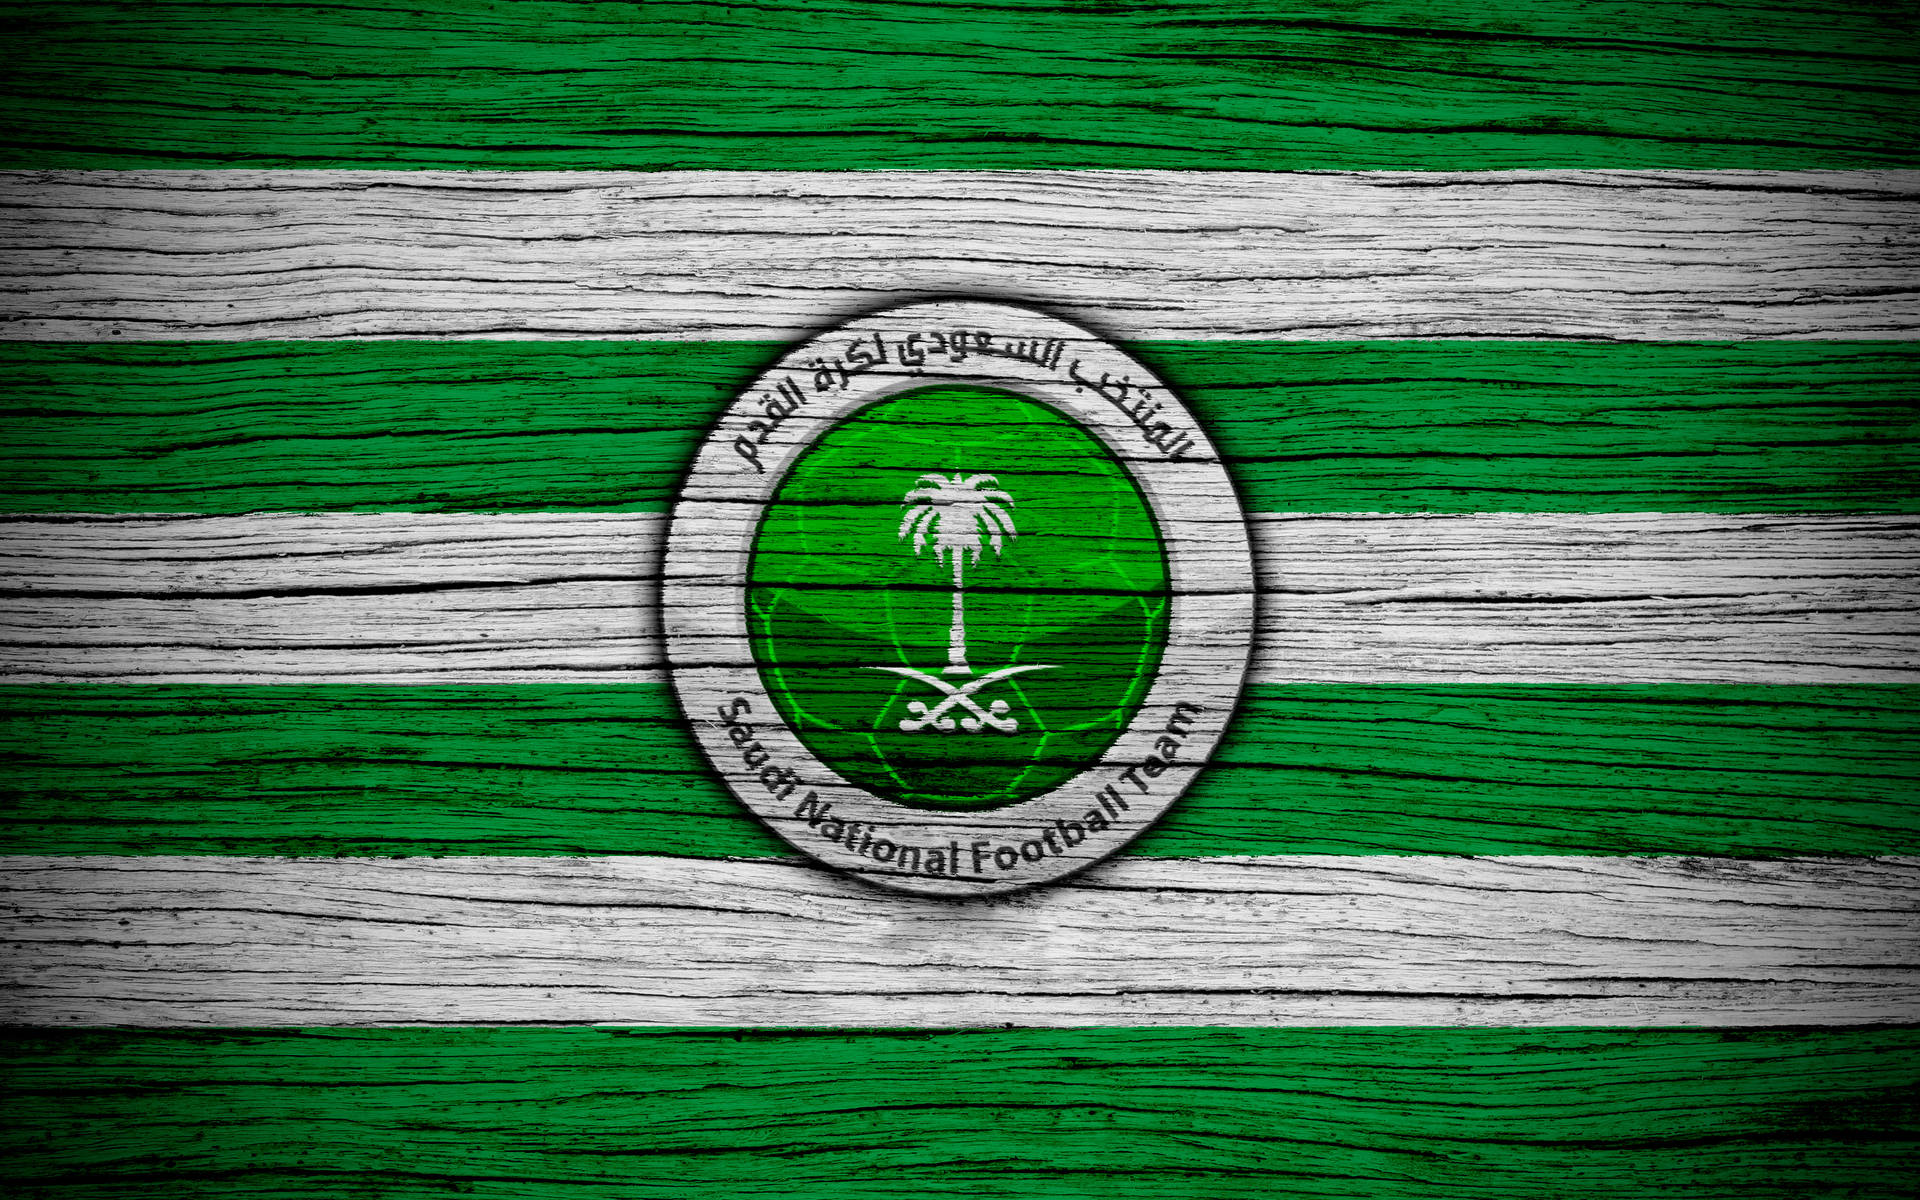 Saudi Arabia National Football Team Wood Sign